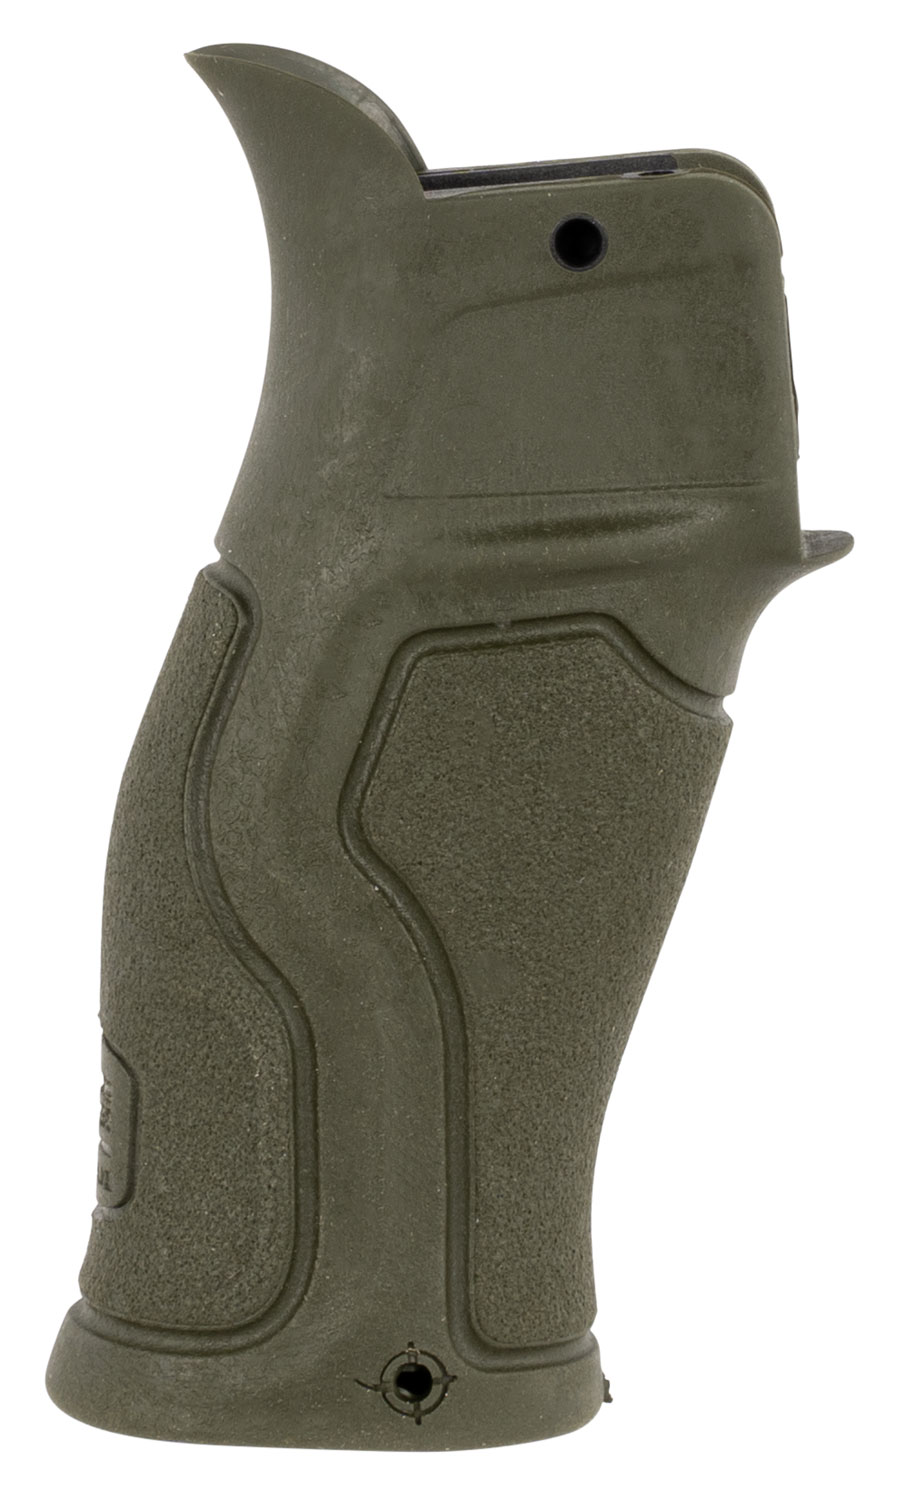 FAB Defense FX-GRADUSG Gradus Ergonomic Pistol Grip 15 Degree OD Green Polymer with Rubber Overmold for AR-15, AR-10, M4, M16